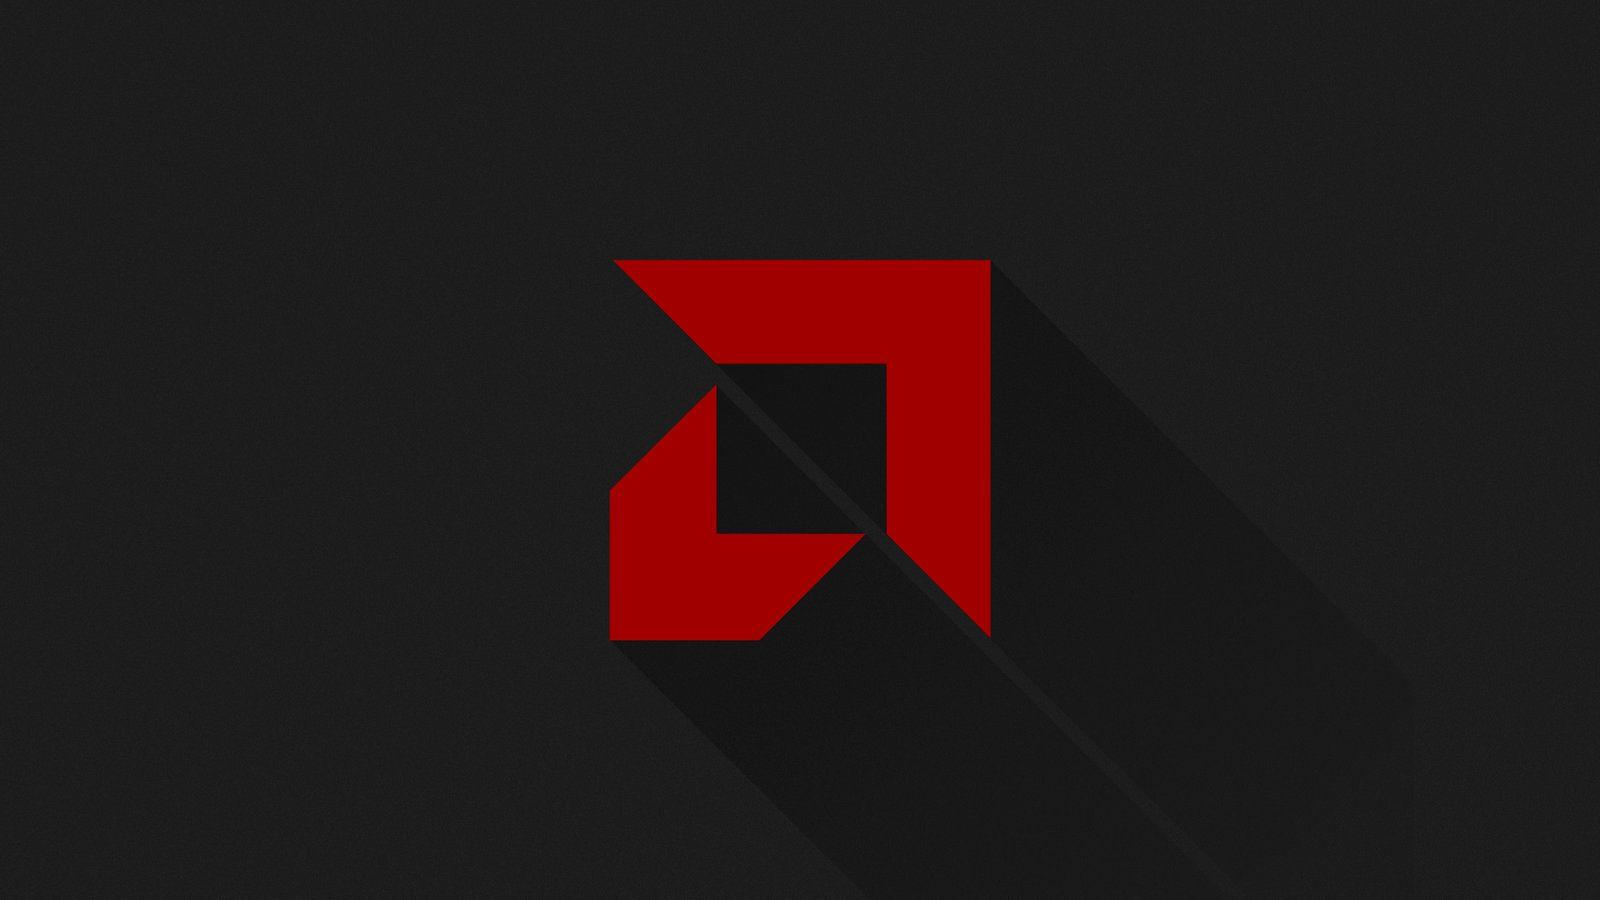 Black AMD Logo - AMD Logo Wallpaper - 52DazheW Gallery